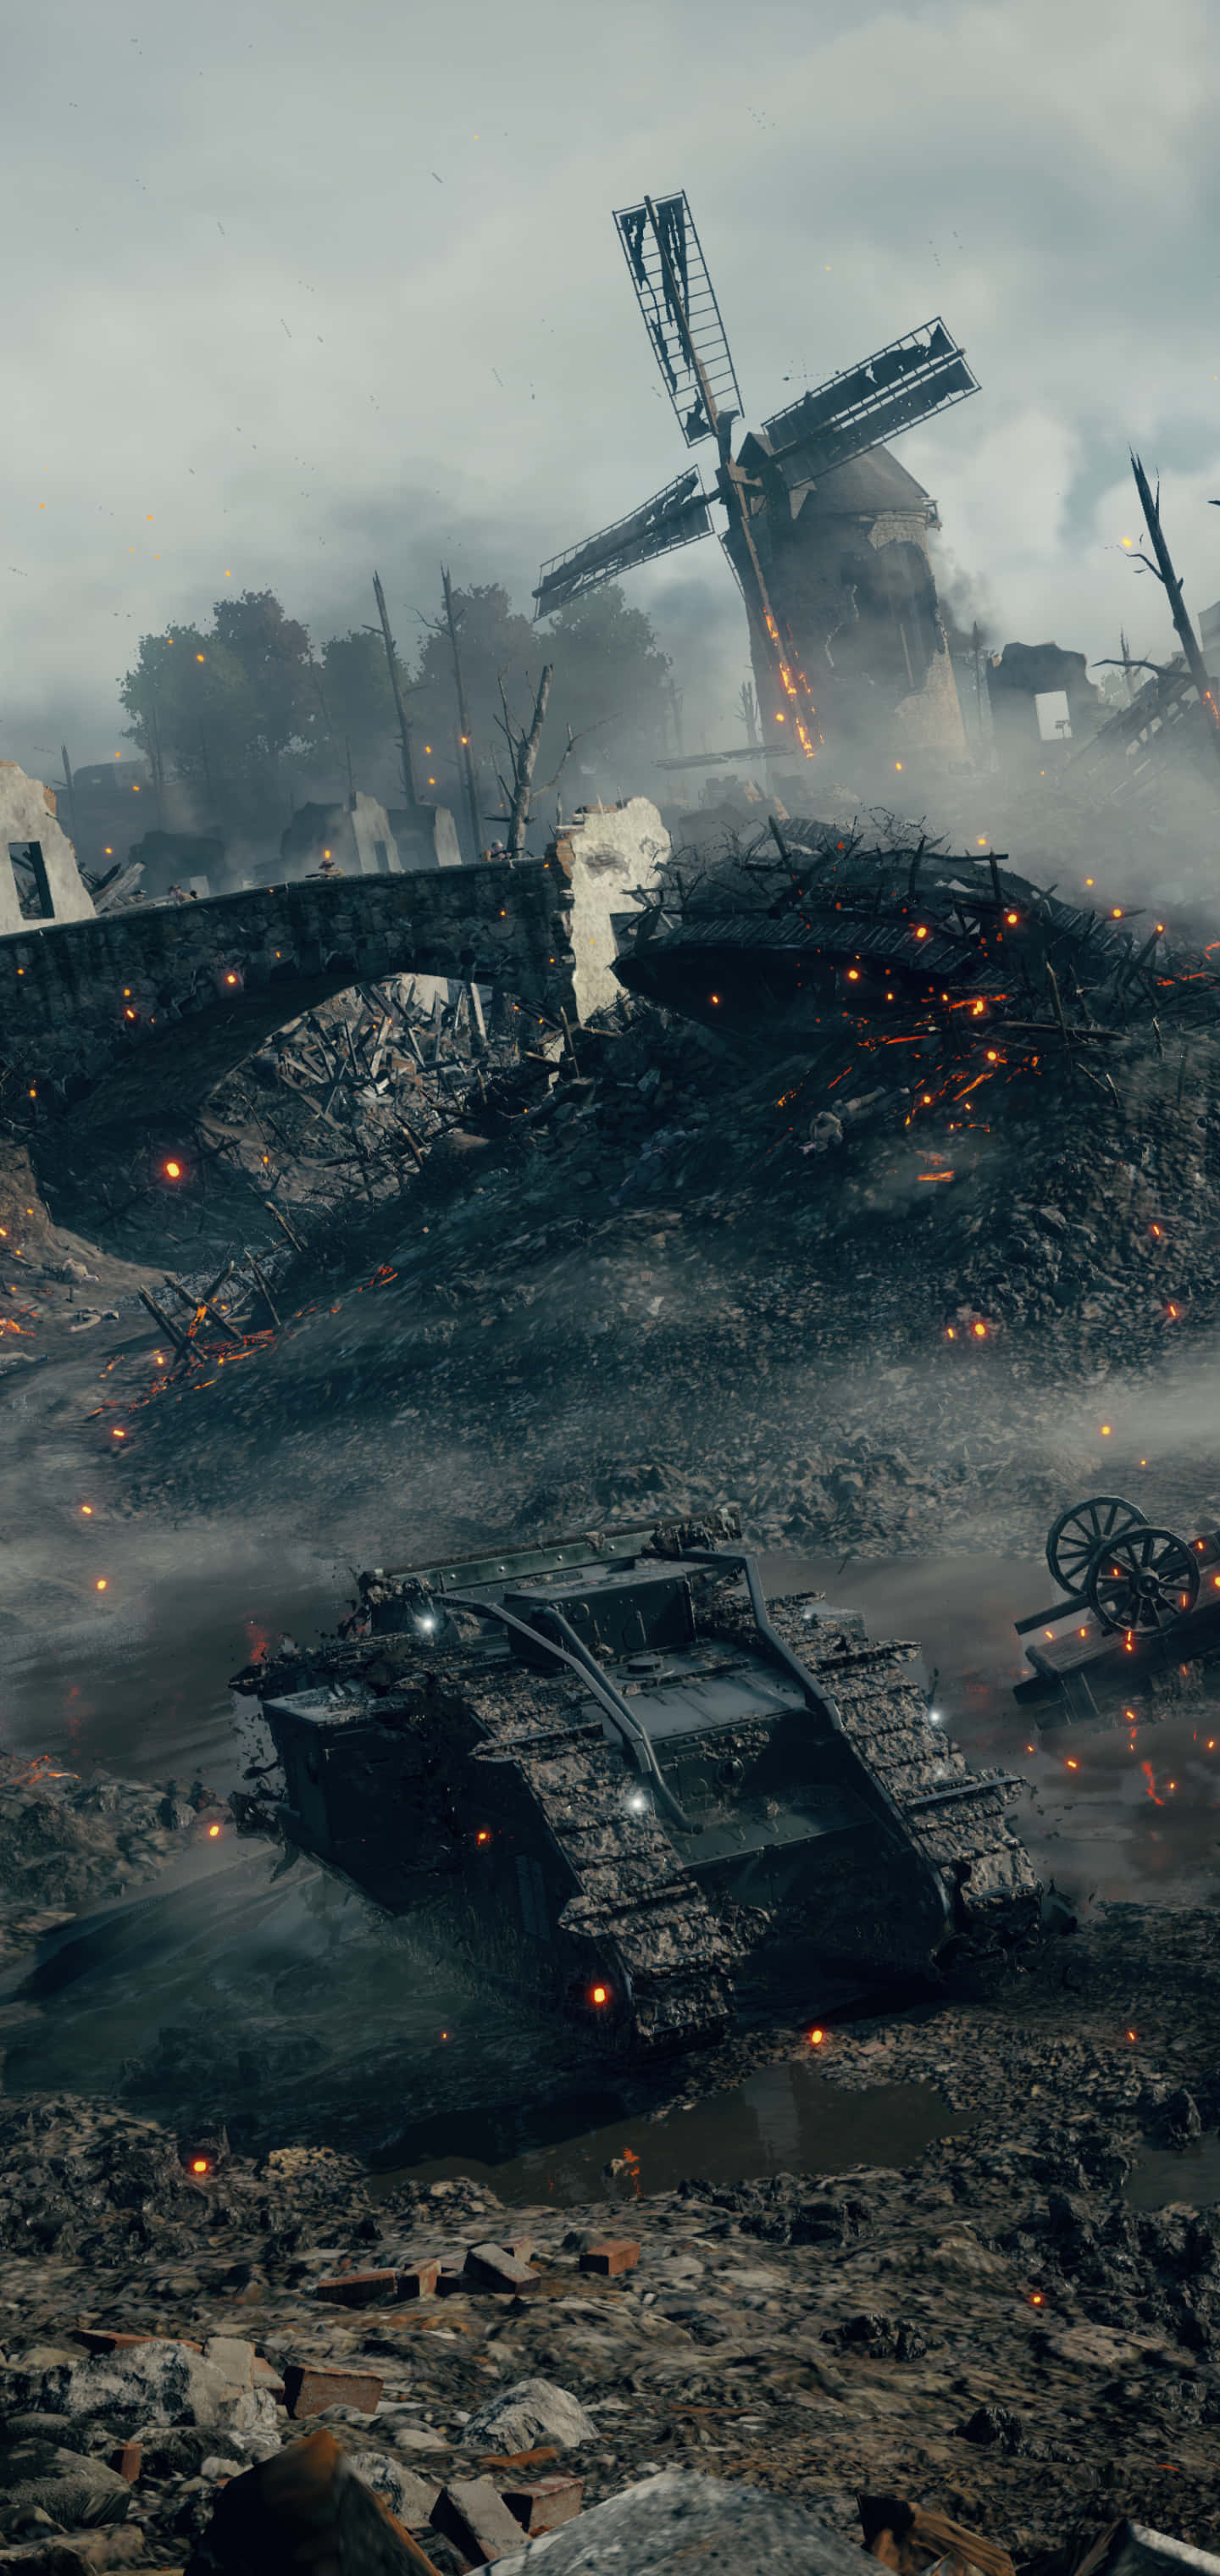 Pixel3xl Hintergrundbild Battlefield 1 Panzer In Raucherfüllter Umgebung